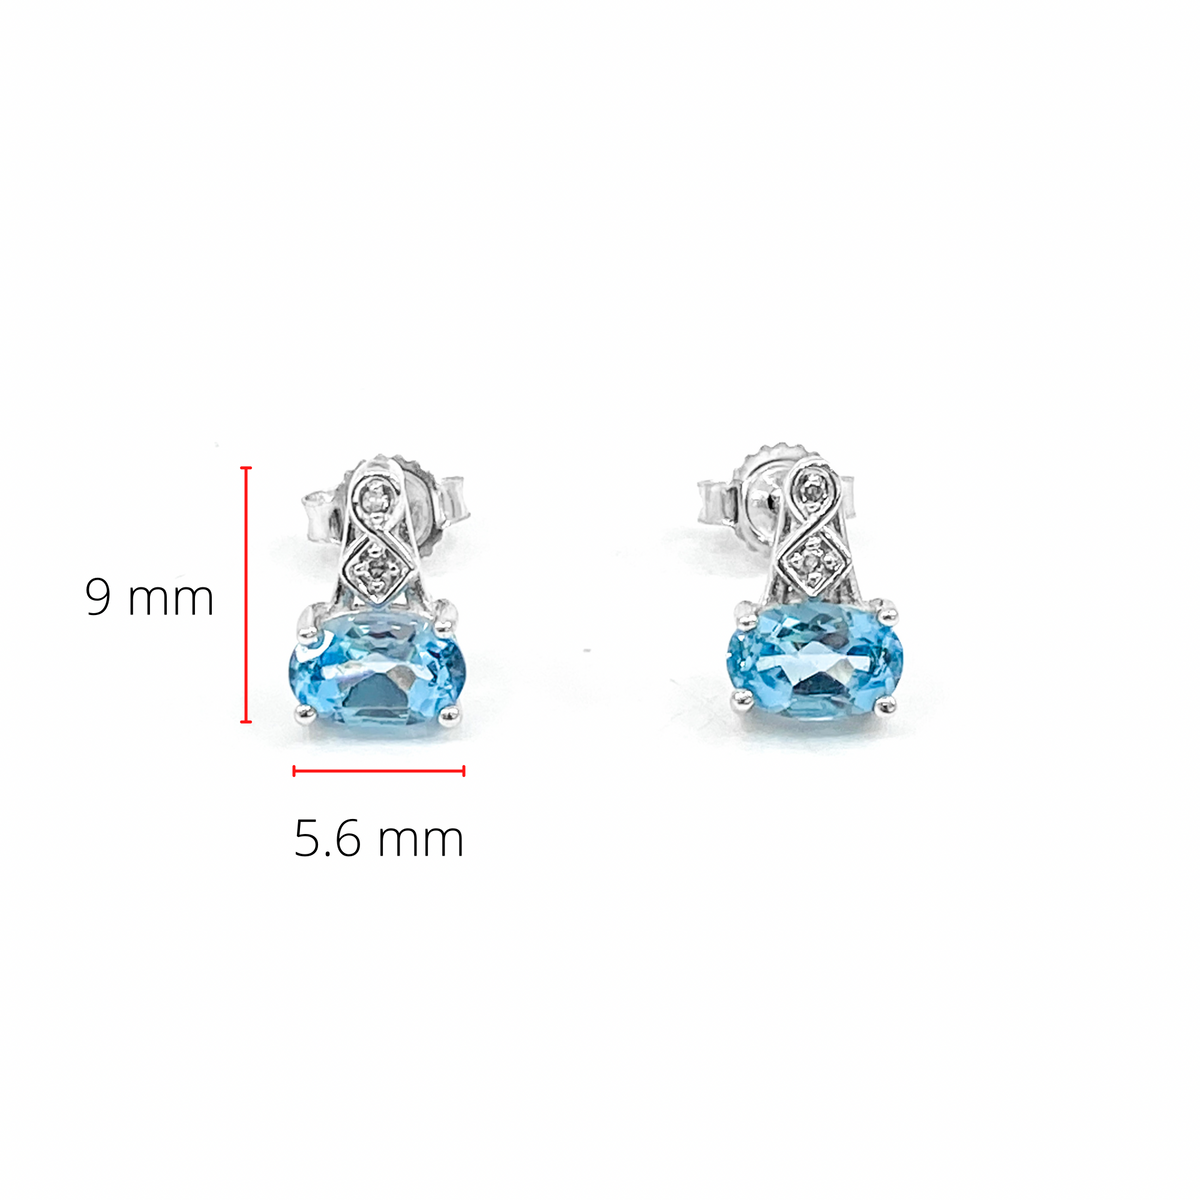 10K White Gold 1.20cttw Genuine Blue Topaz and 0.02cttw Diamond Earrings